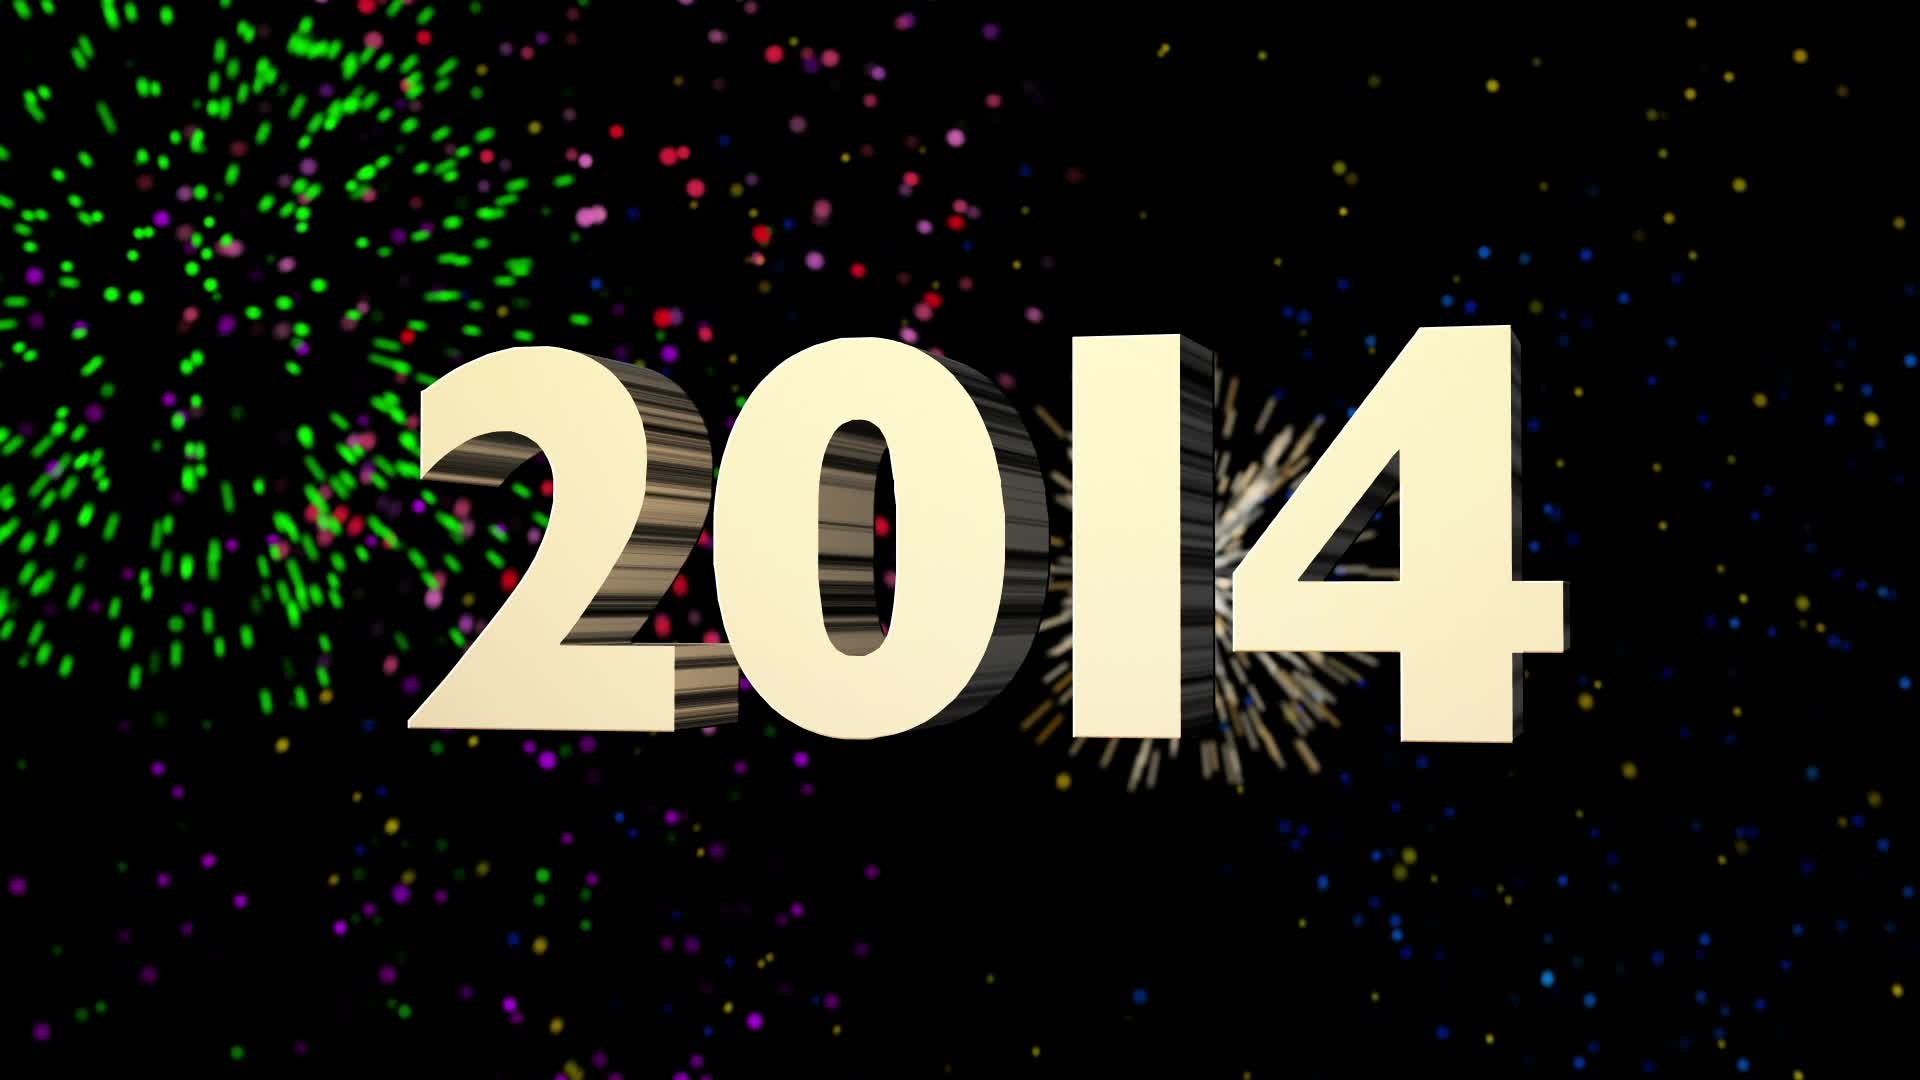 New-Year-2014-Image-Dekstop-High-Wallpaper